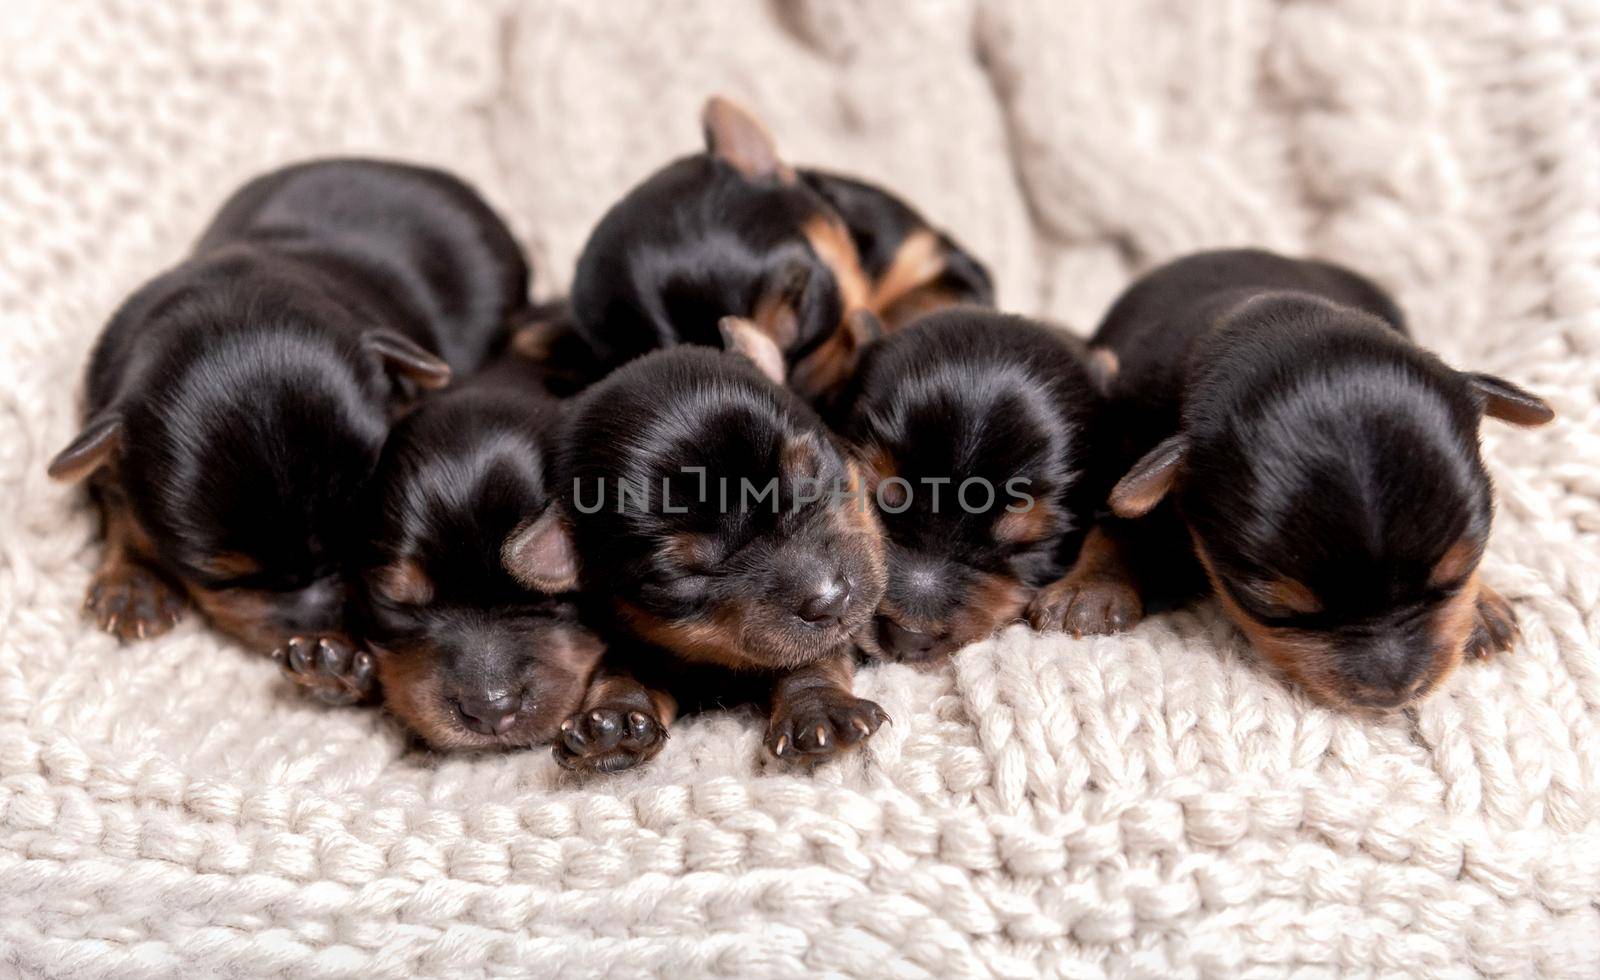 Little black york breed puppies sweetly sleeping on light blanket